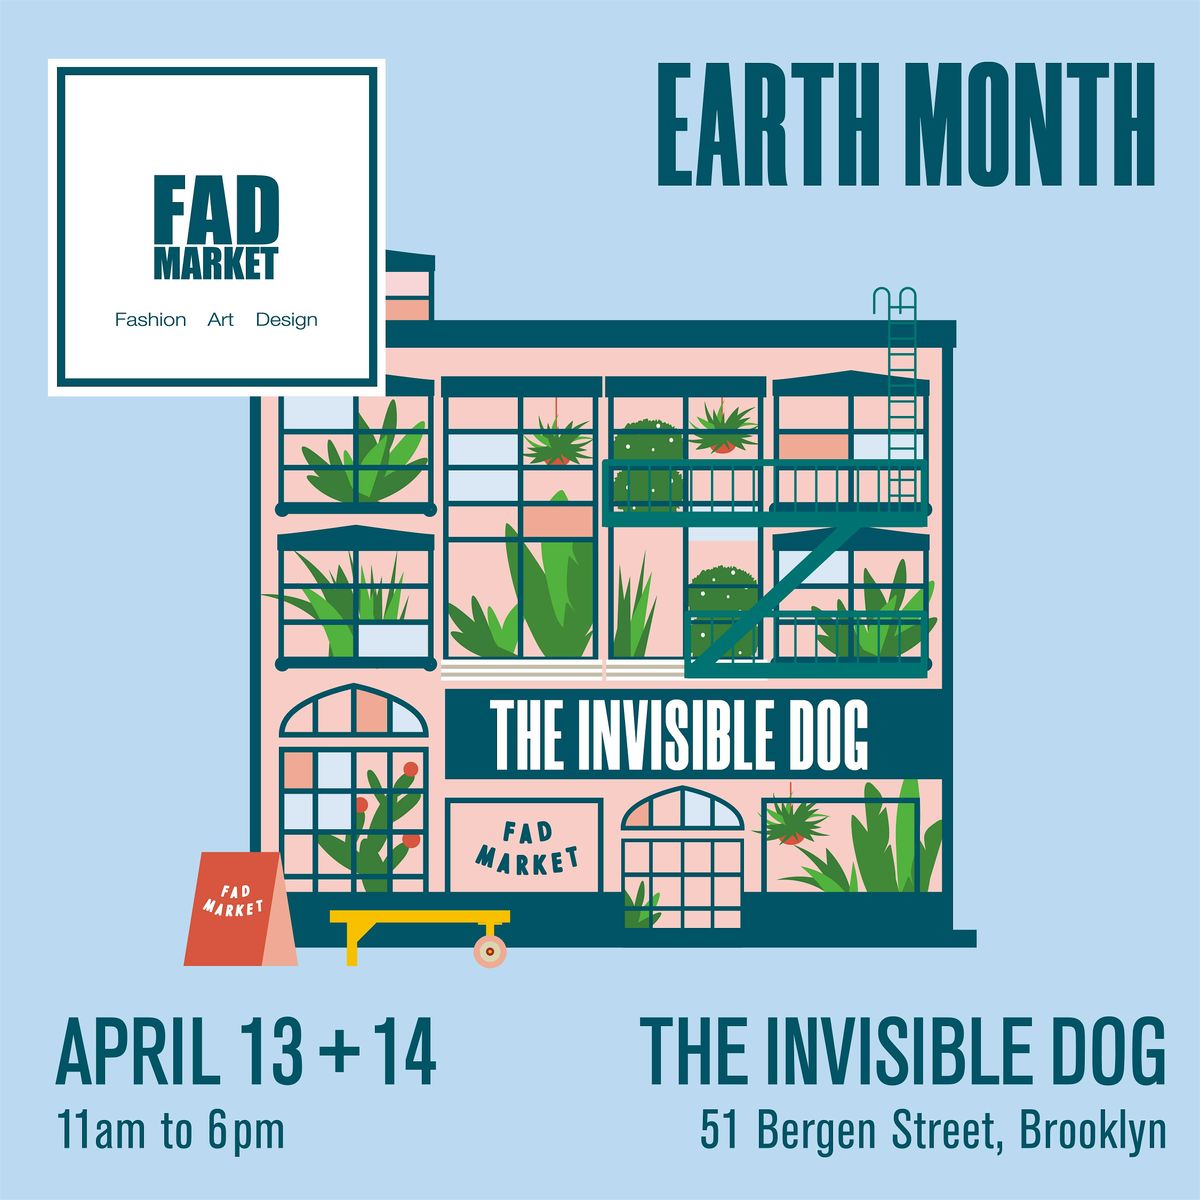 FAD - Earth Month